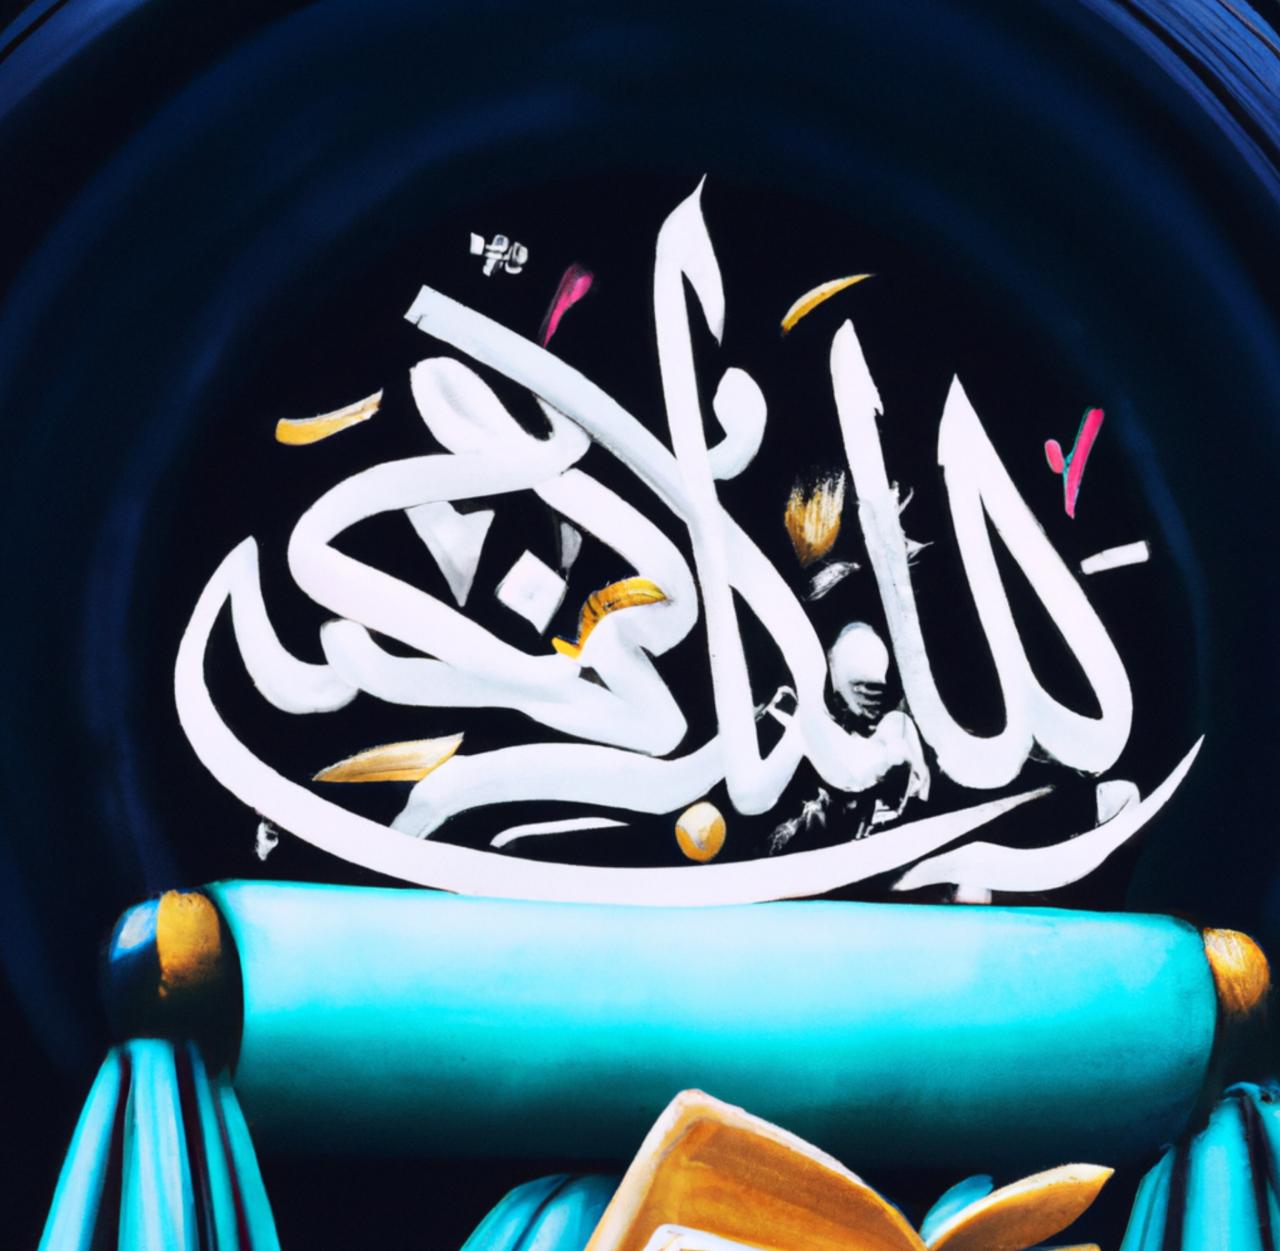 <a href="https://www.pshterate.com/"><img src="Surah Al Quraisy Kaligrafi Logo Ilustrasi.jpg" alt="Surah Al Quraisy: menjelaskan tentang Suku Quraisy"></a>